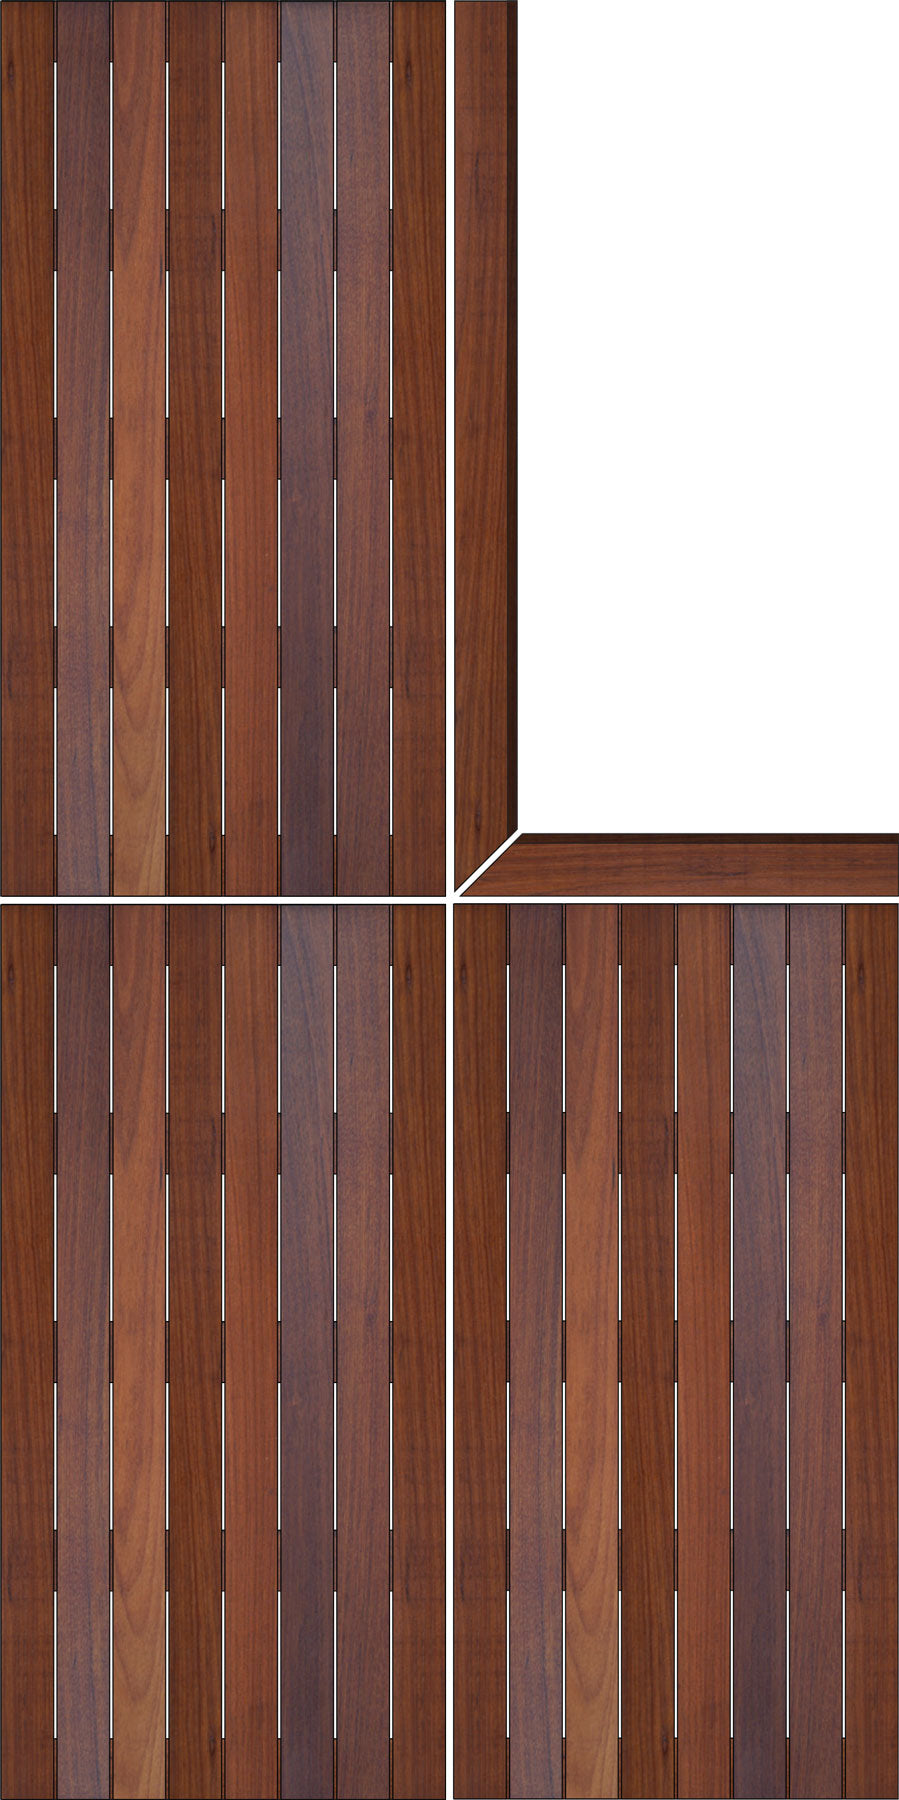 24 x 48 Deck Tile Edge Trim - Inside Corner Left Set